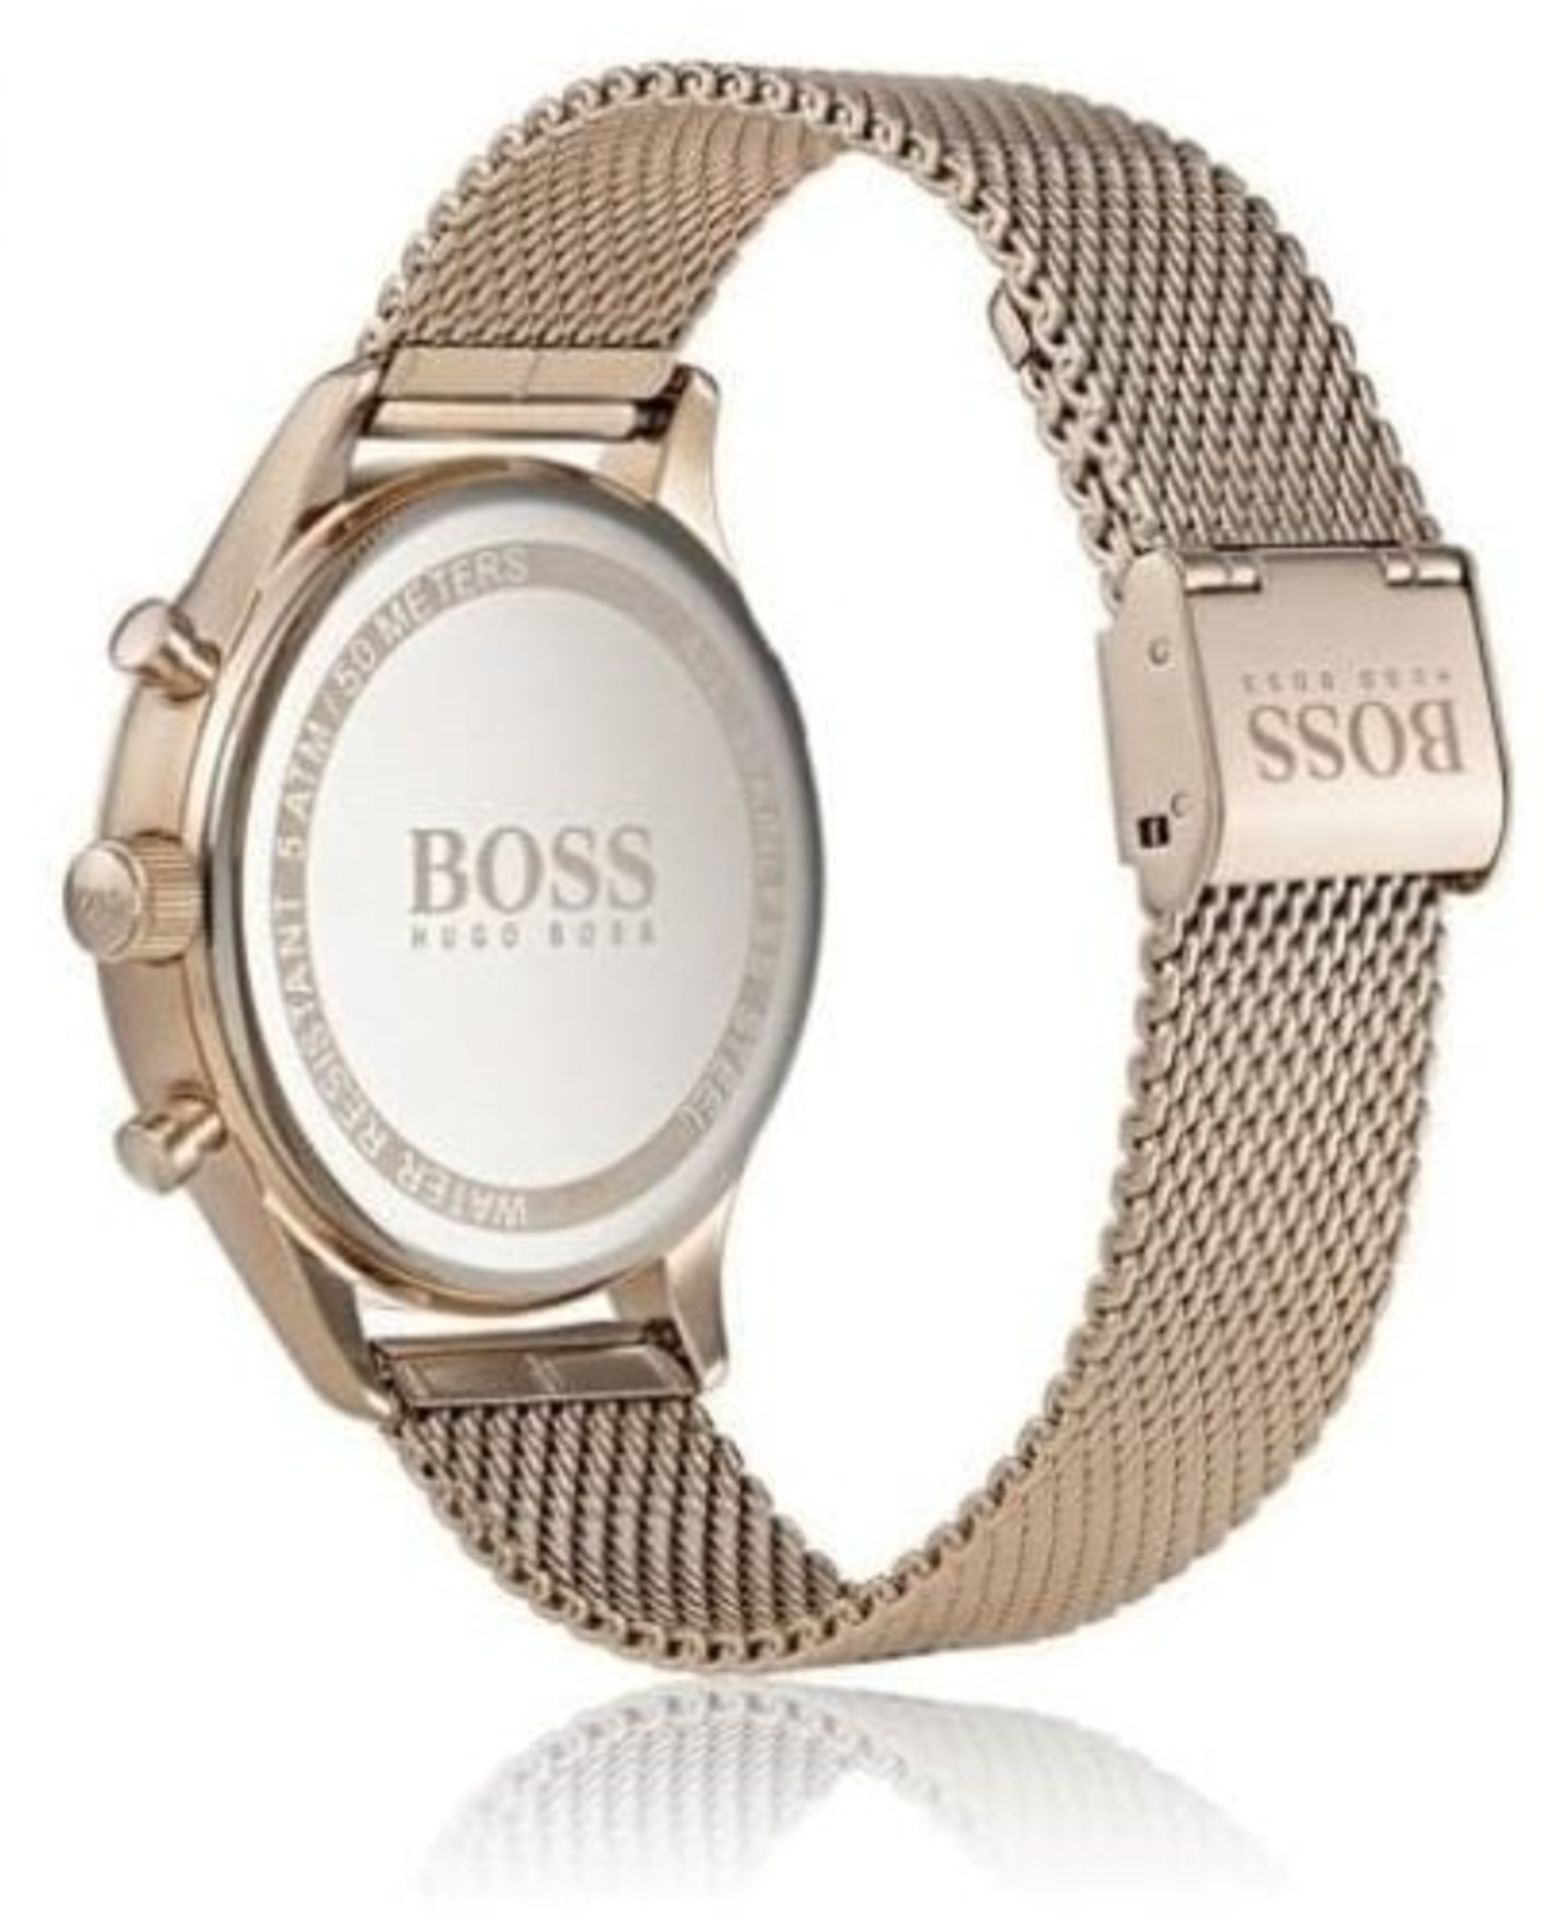 Hugo Boss 1513548 Men's Companion Rose Gold Mesh Band Quartz Chronograph Watch - Image 7 of 7